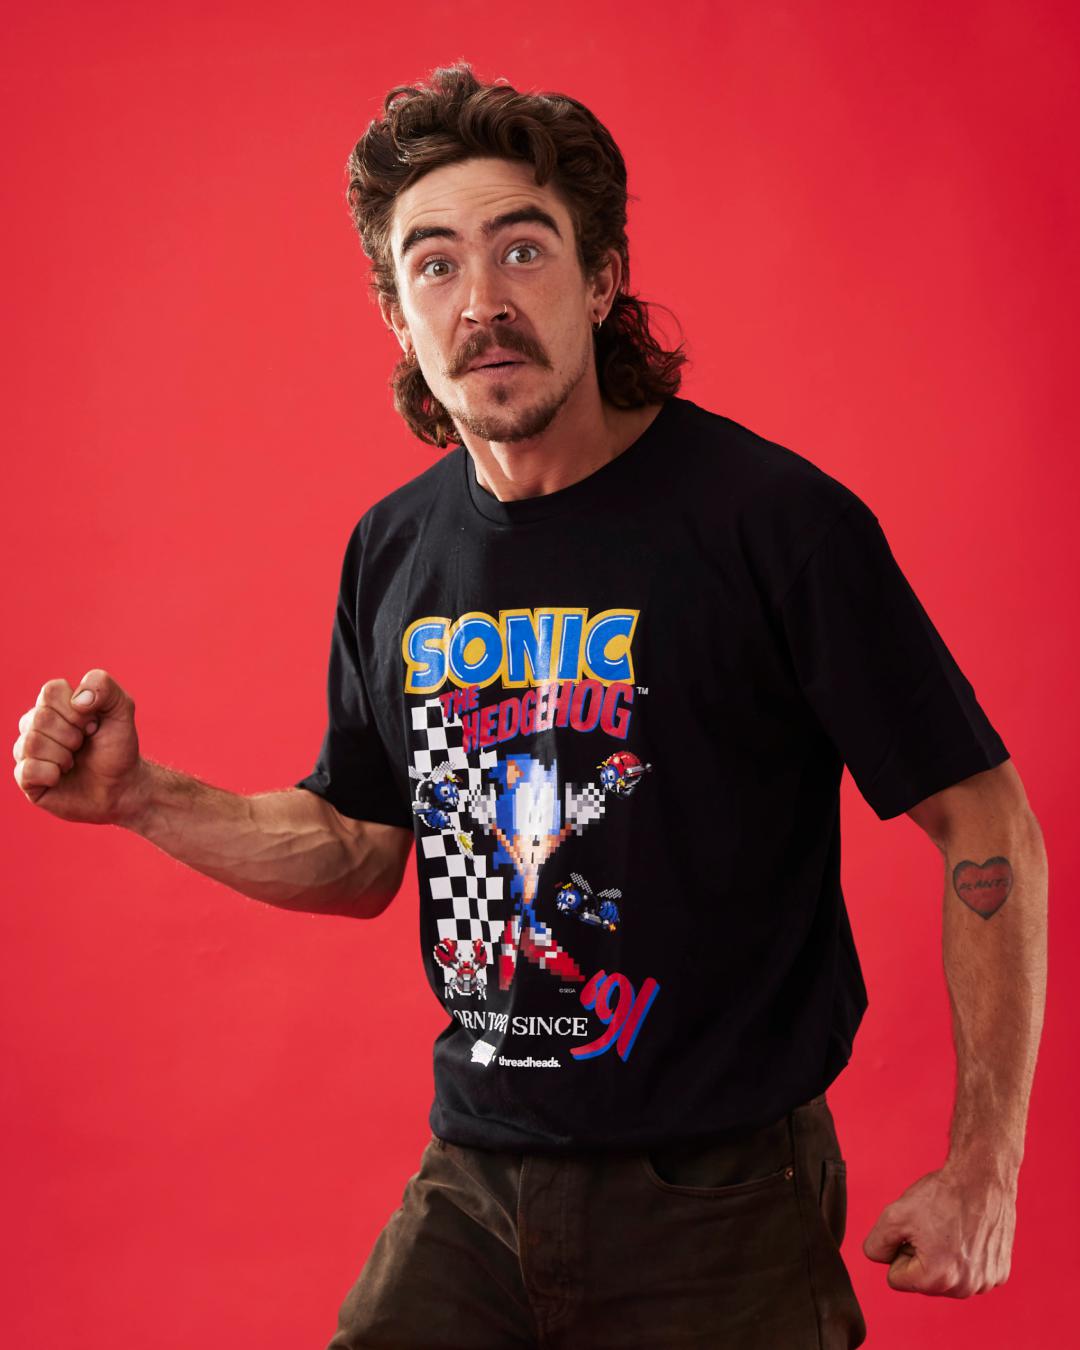 Sonic Born to Run Since 91 T-Shirt Australia Online